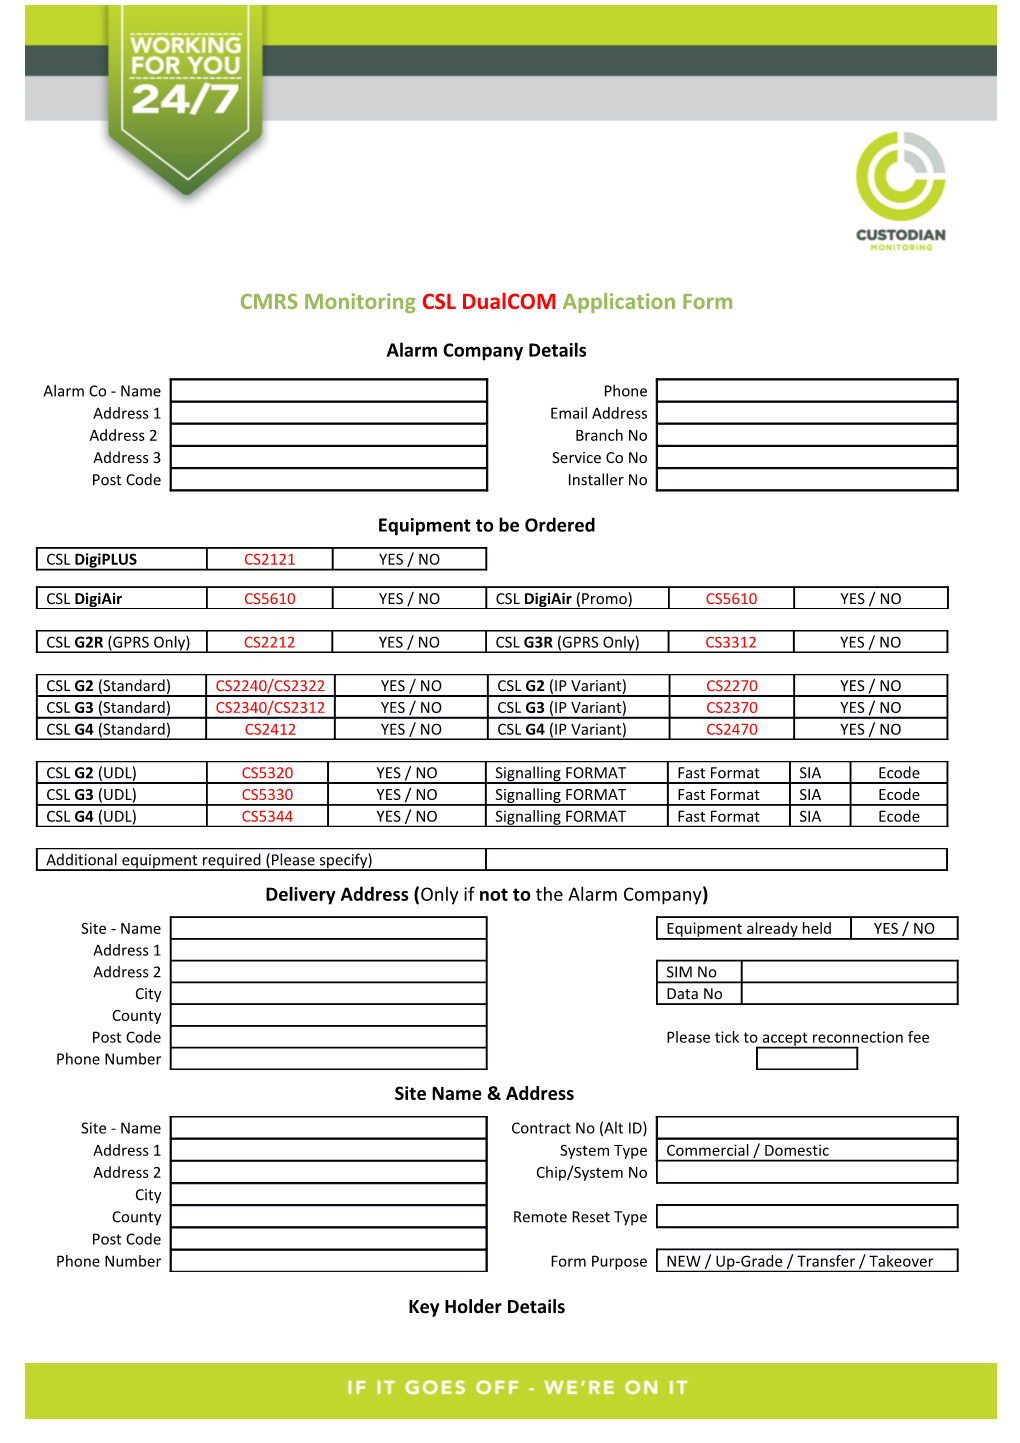 CMRS Monitoring CSL Dualcom Application Form